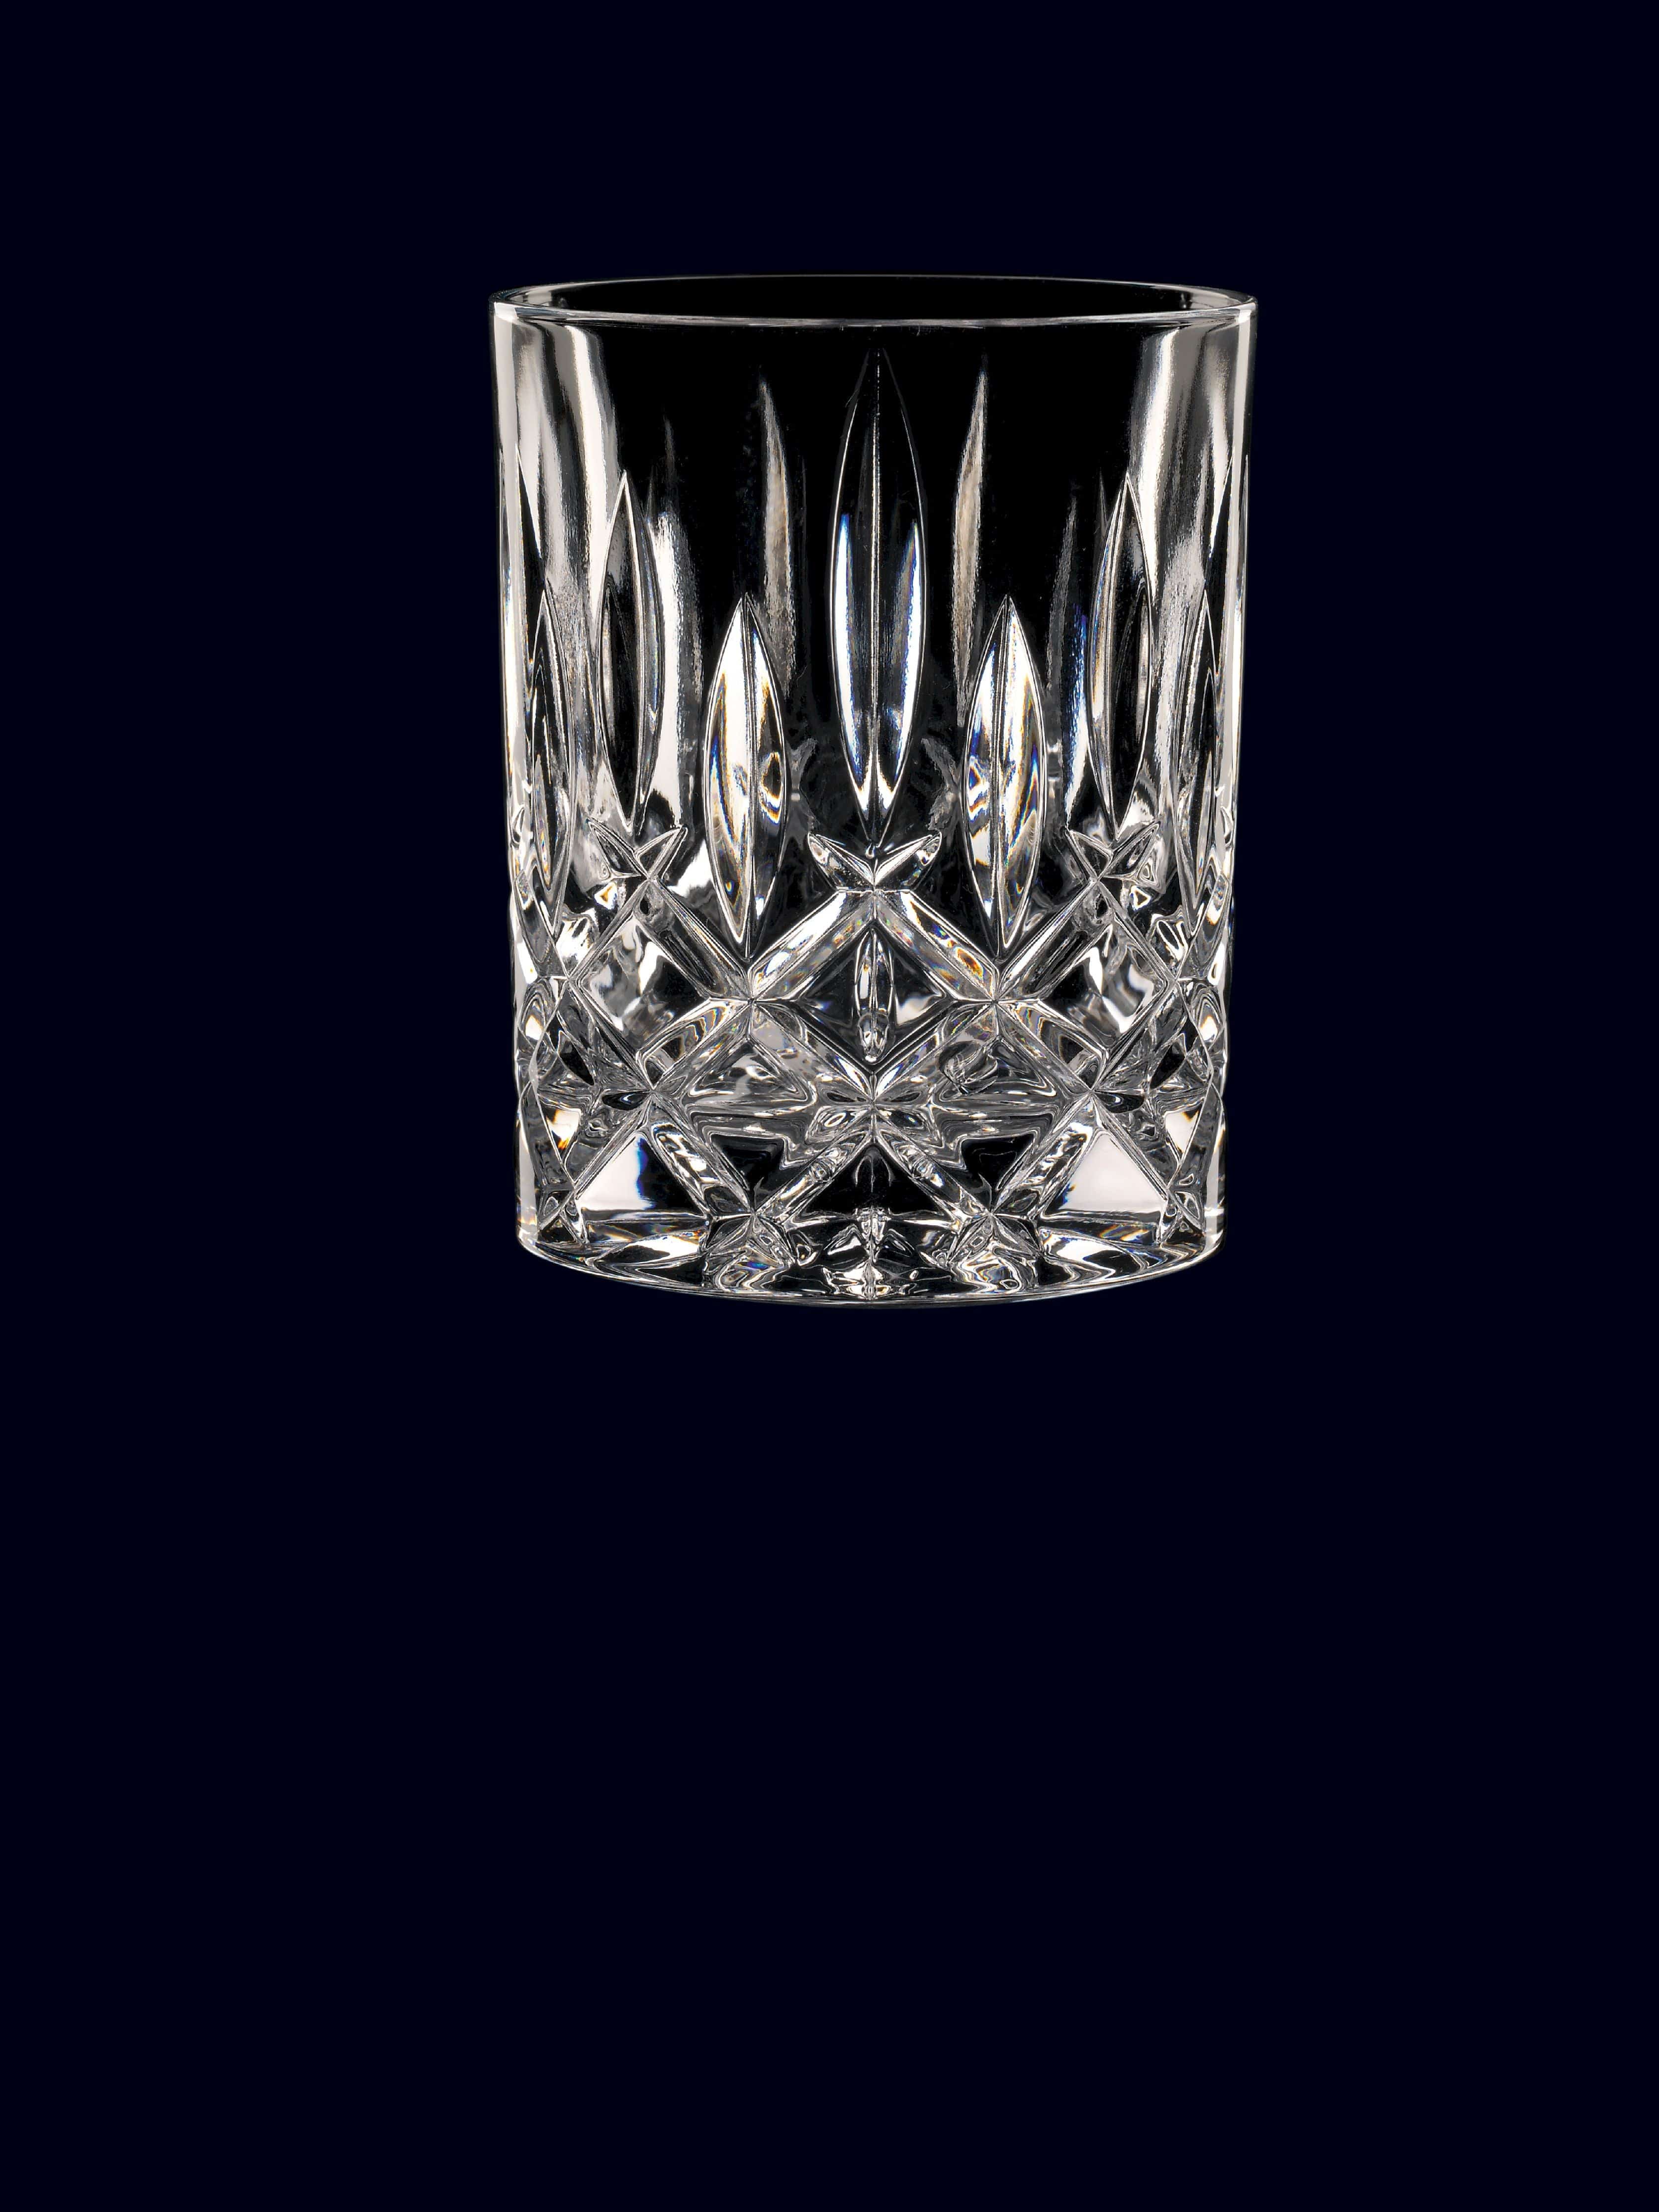 Nachtmann Noblesse Whisky Glass 295 ml, 4 st.